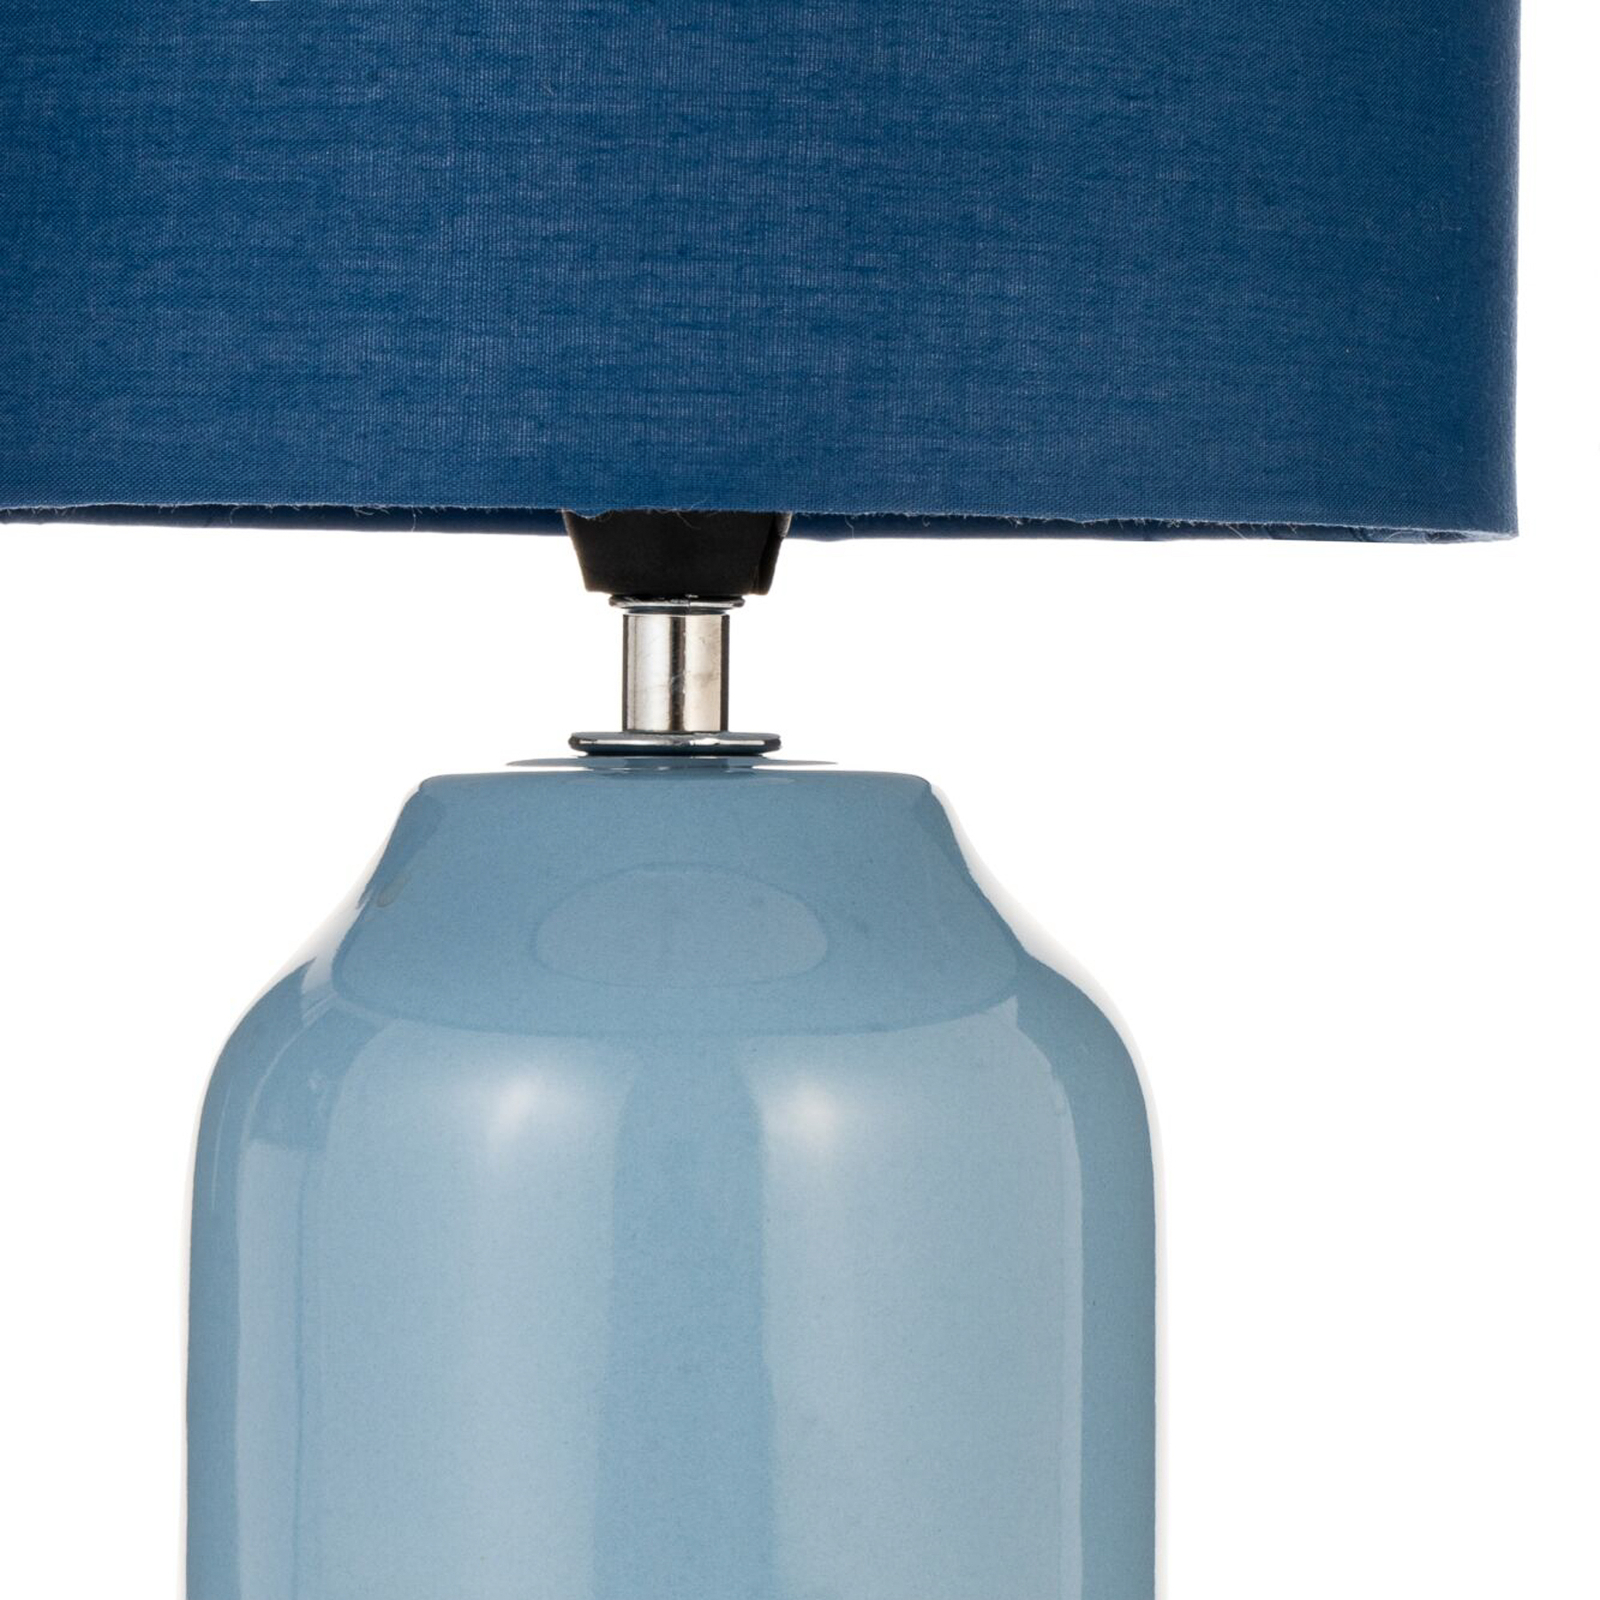 Pauleen Sandy Glow table lamp, blue/blue